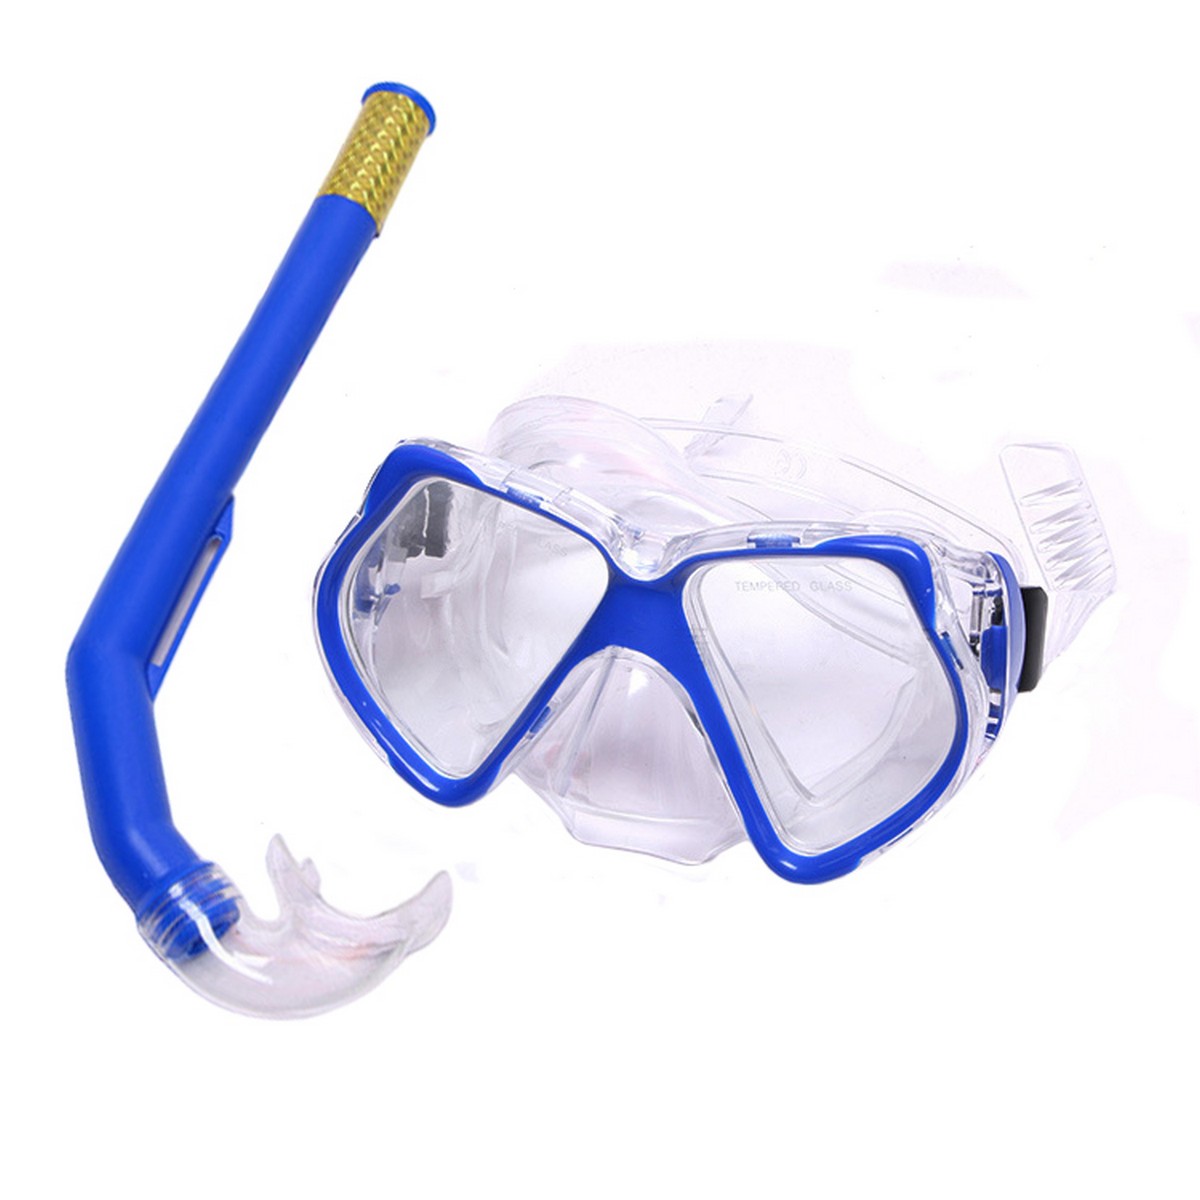 фото Набор для плавания взрослый sportex маска+трубка (пвх) e41231 синий